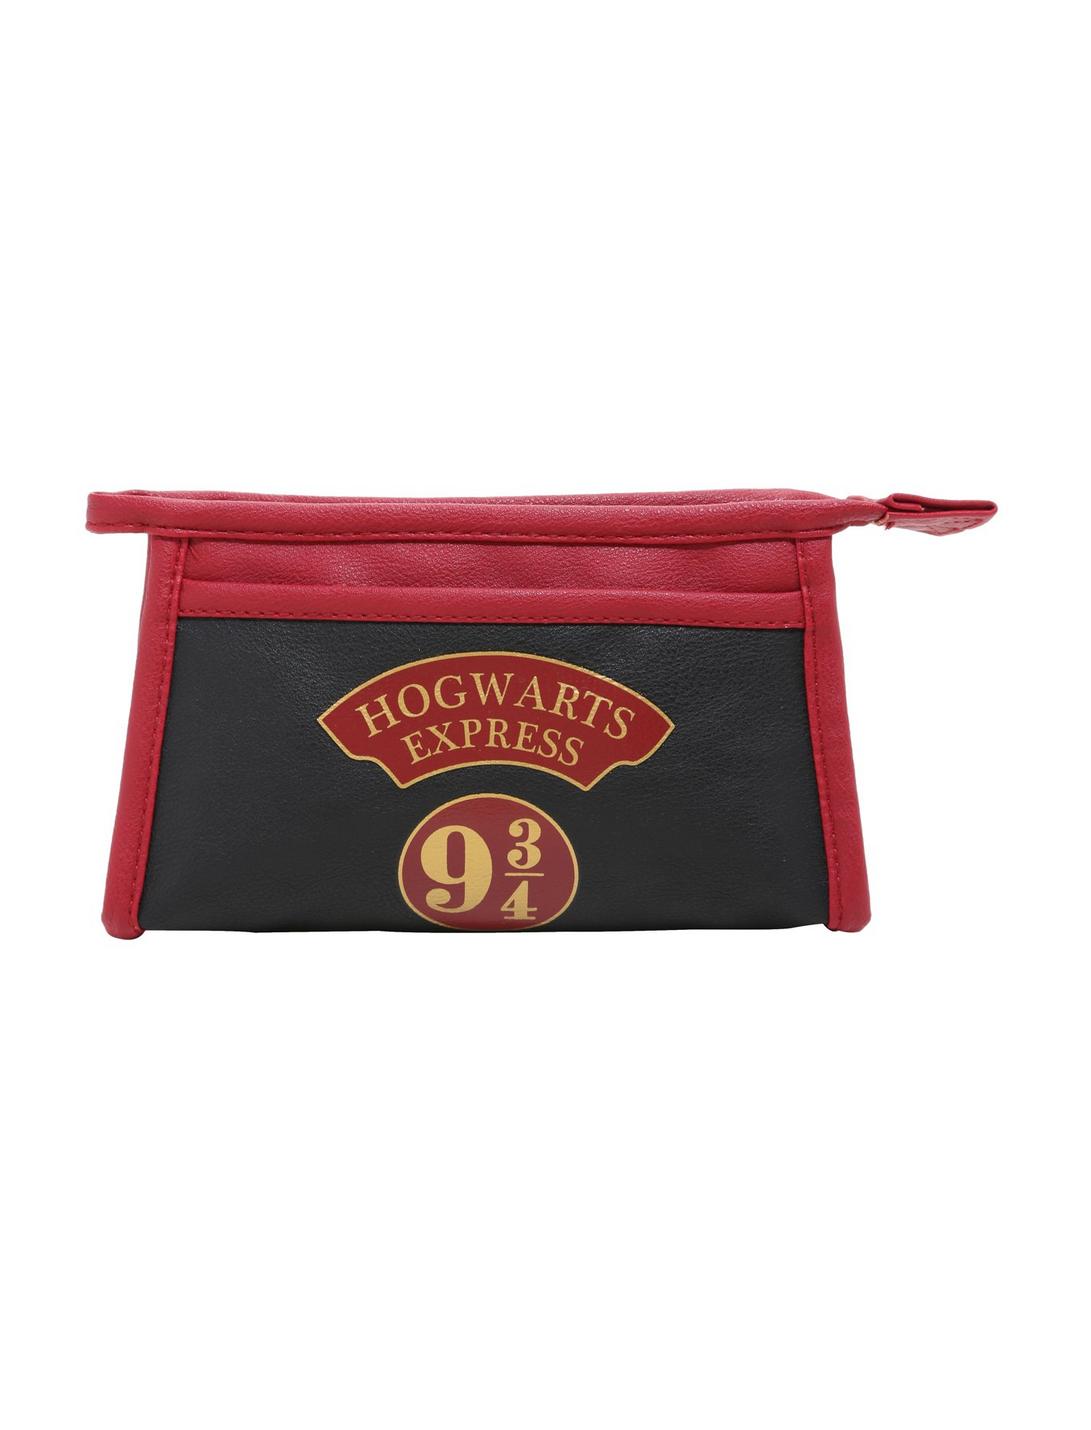 Harry Potter Hogwarts Express 9 3/4 Makeup Bag, , hi-res